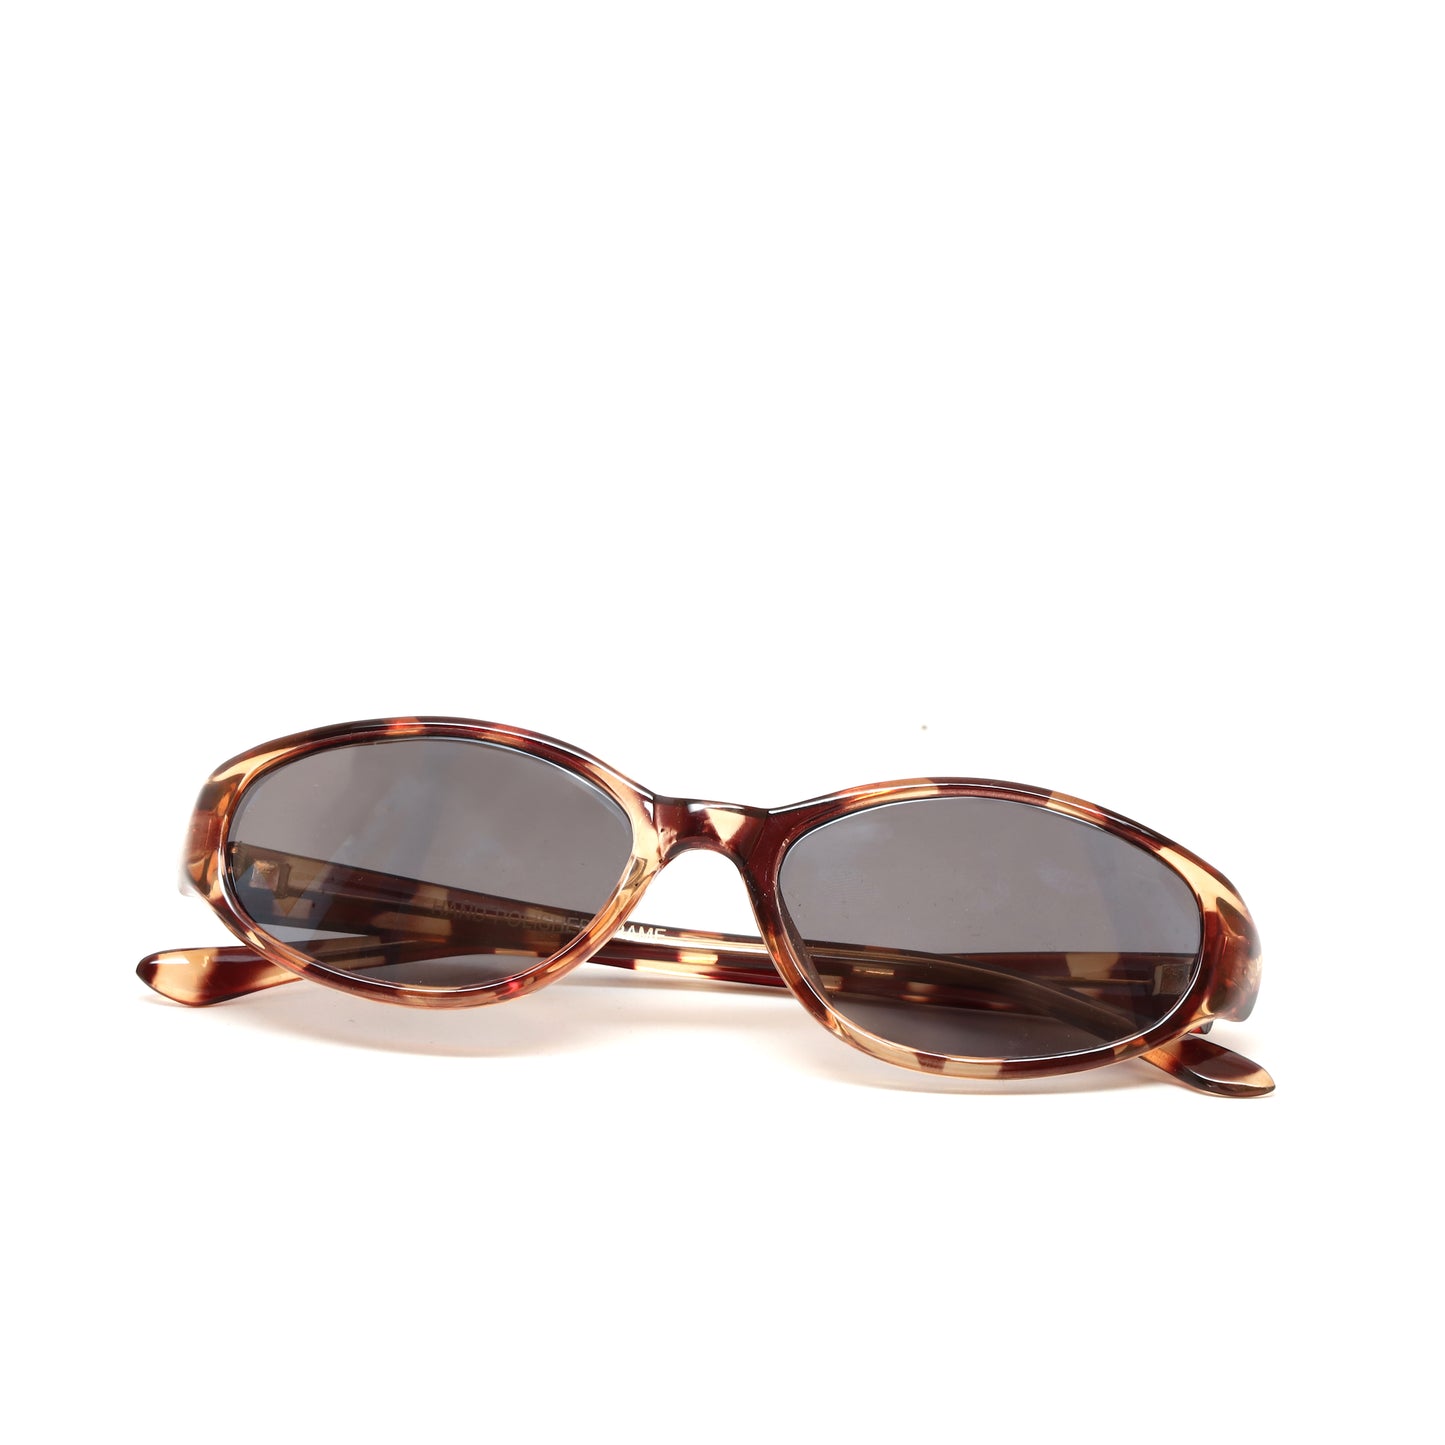 Vintage 1990s Chic Standard Oval Frame Sunglasses - Brown